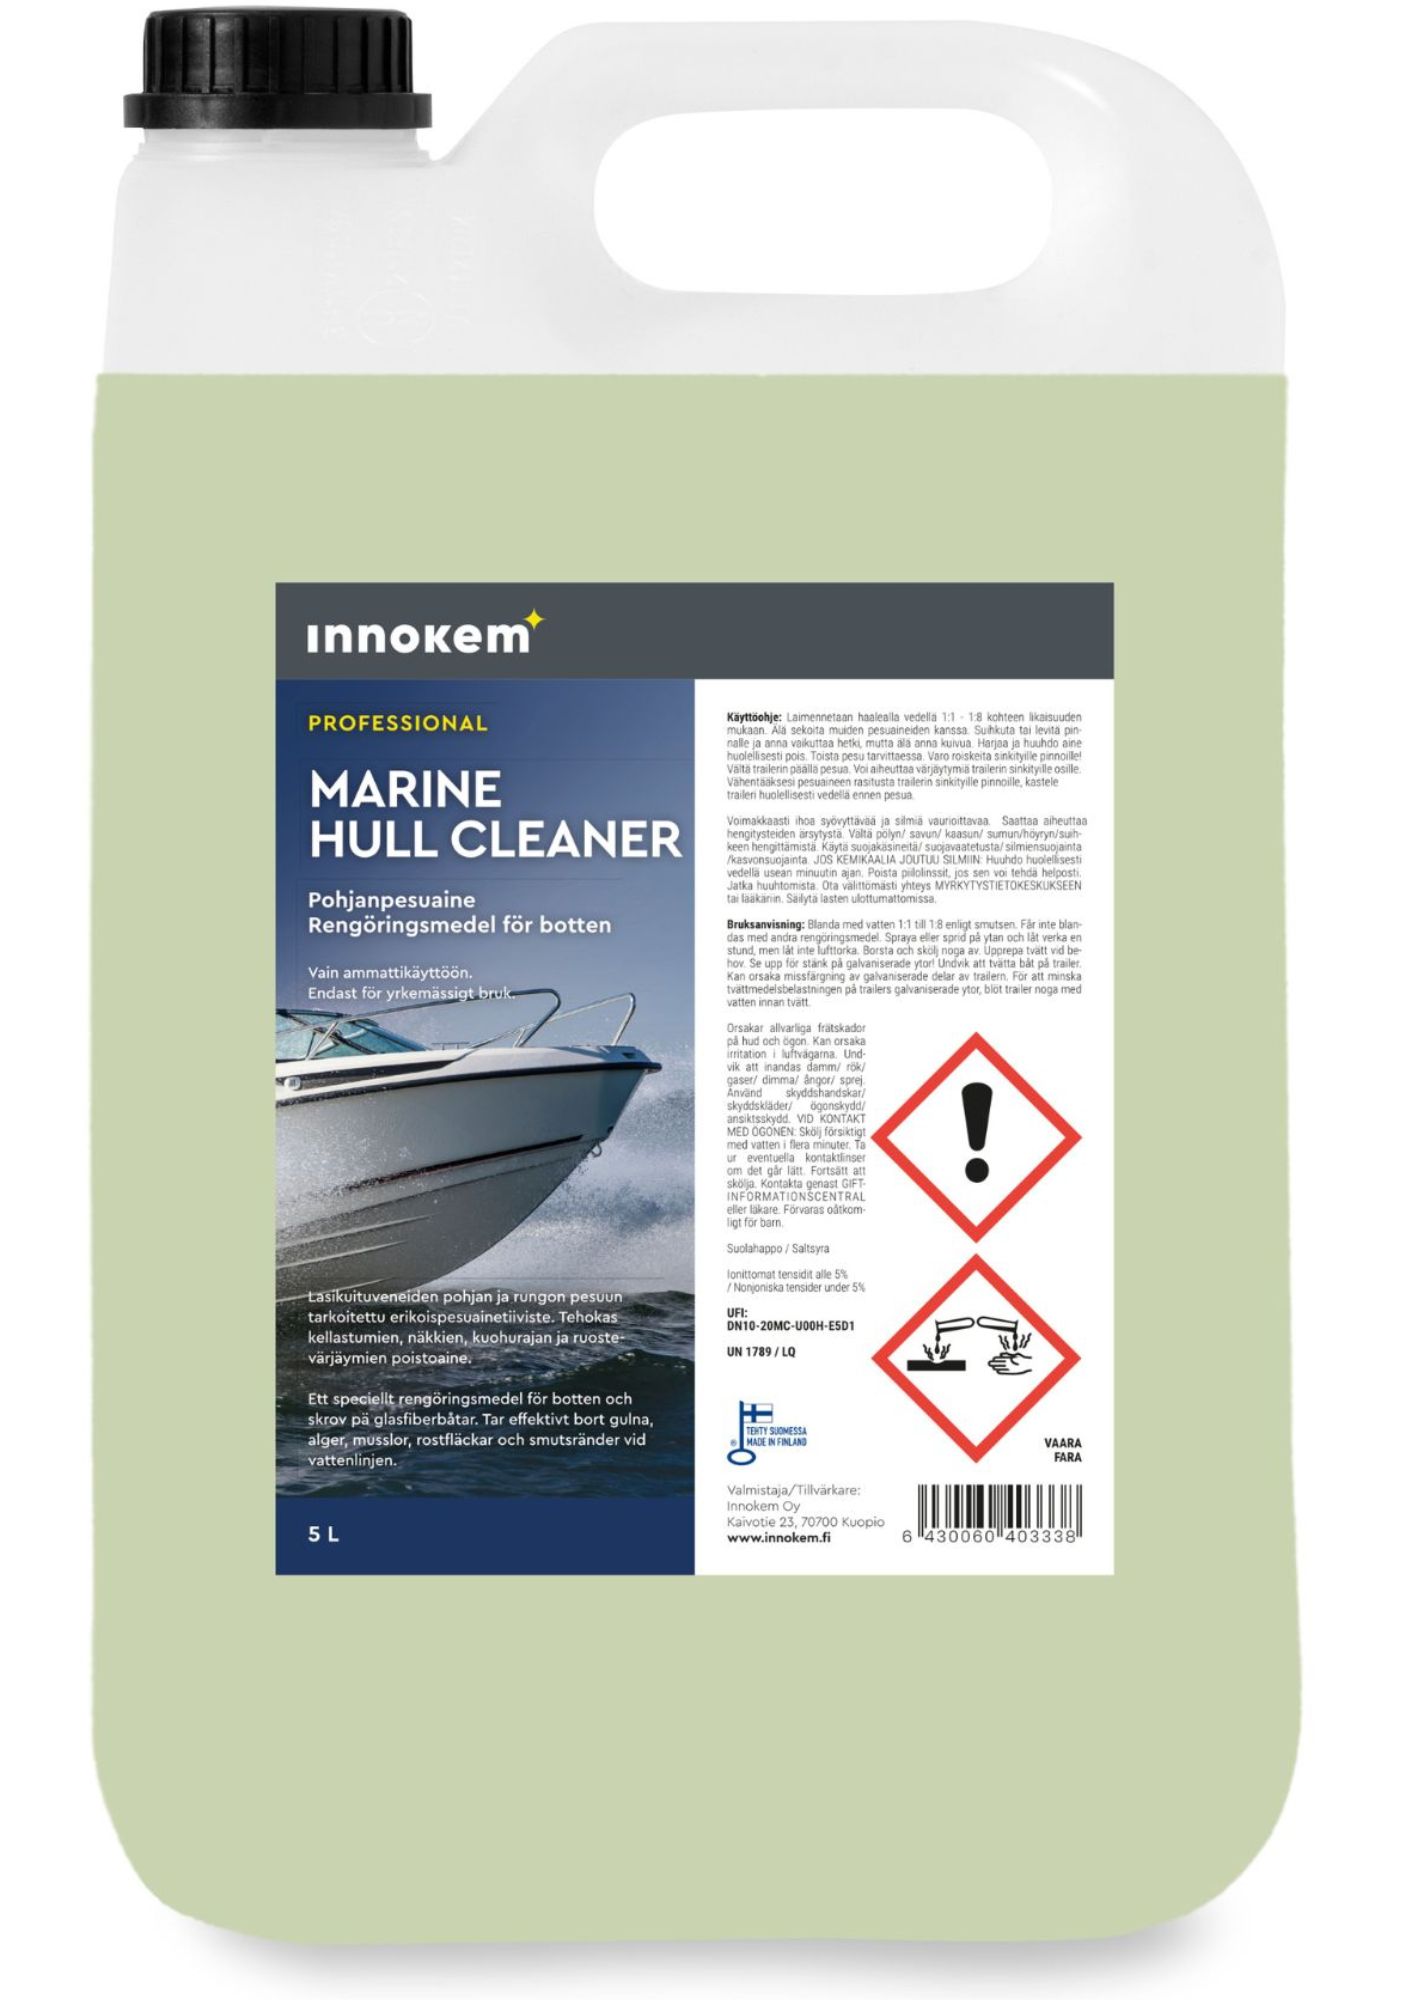 innokem marine hull cleaner pohjanpesuaine